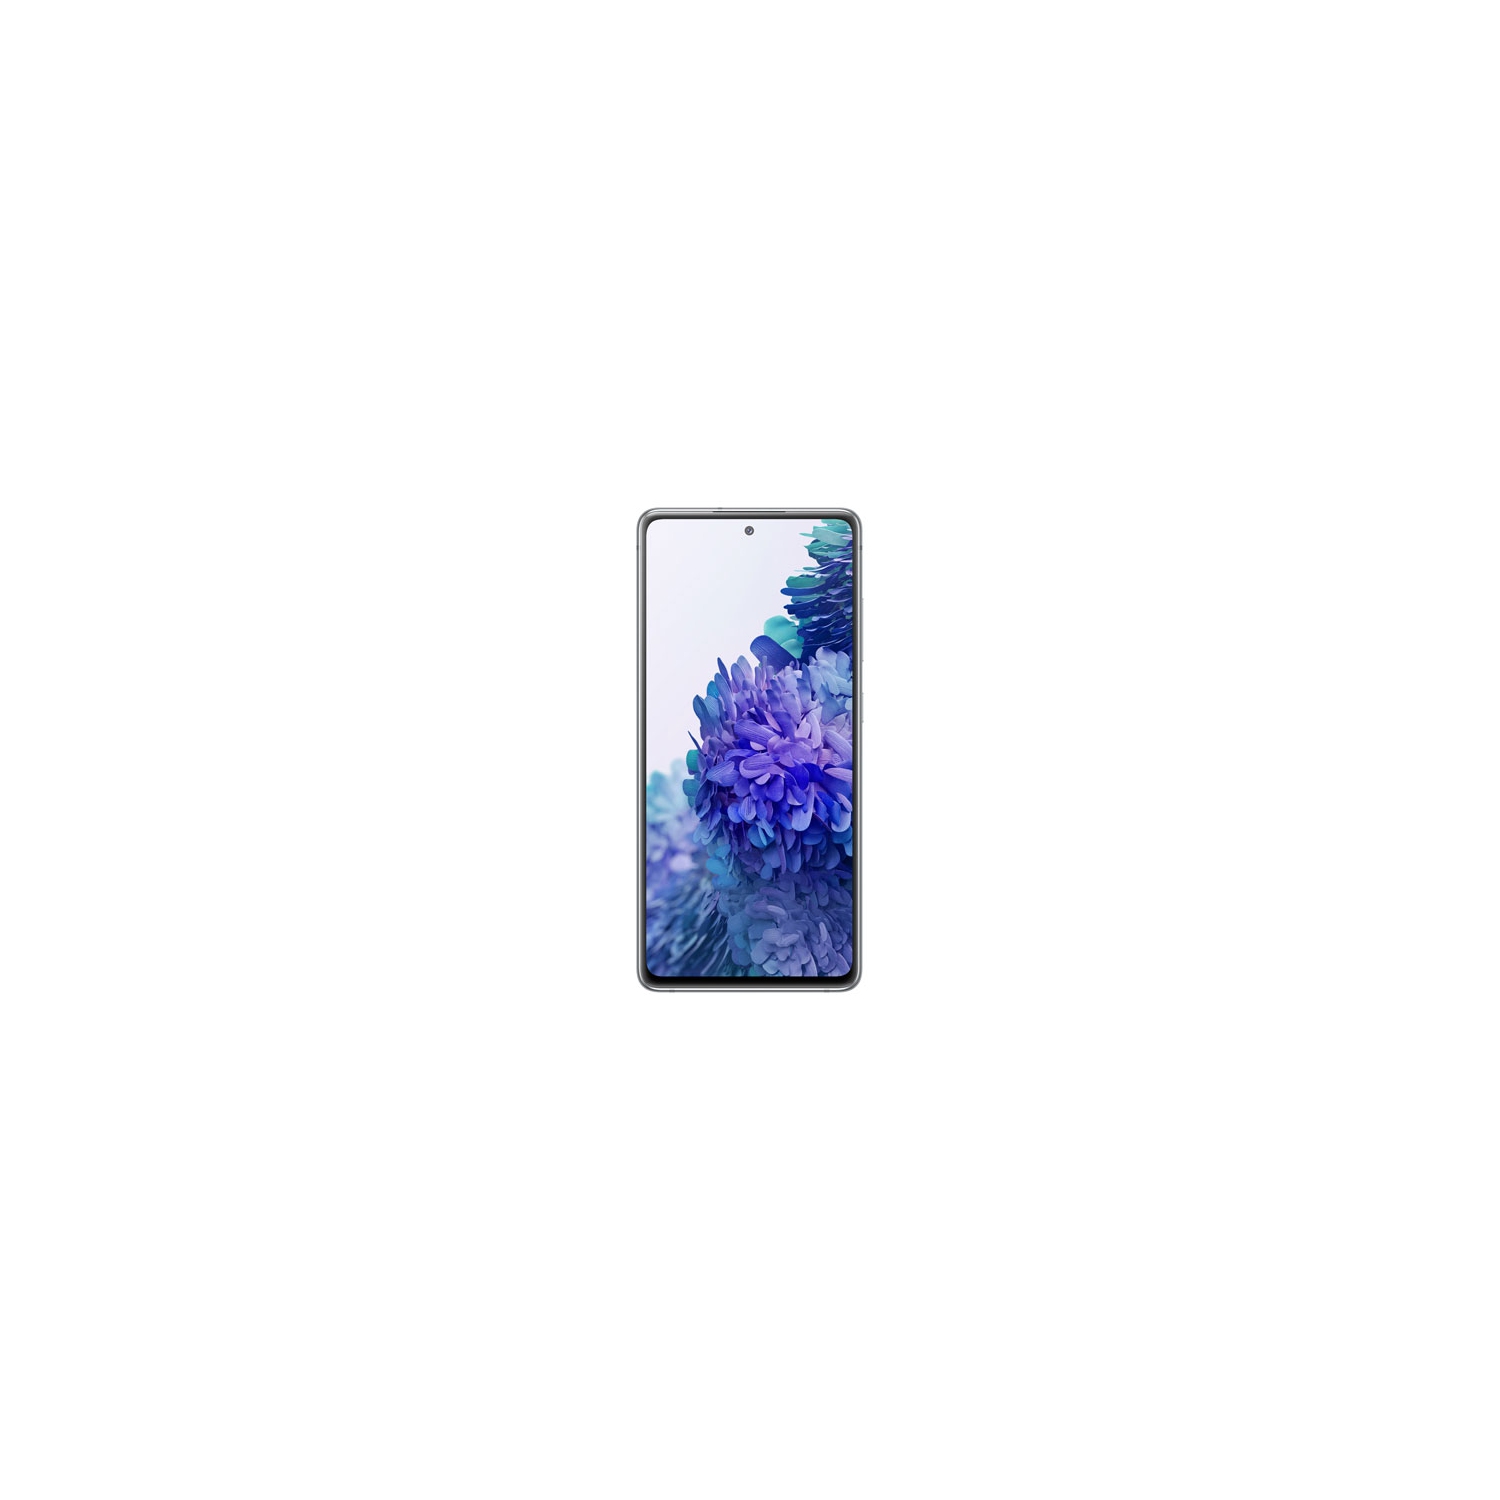 Refurbished (Good) - Samsung Galaxy S20 FE 5G 128GB Smartphone - Cloud White - Unlocked